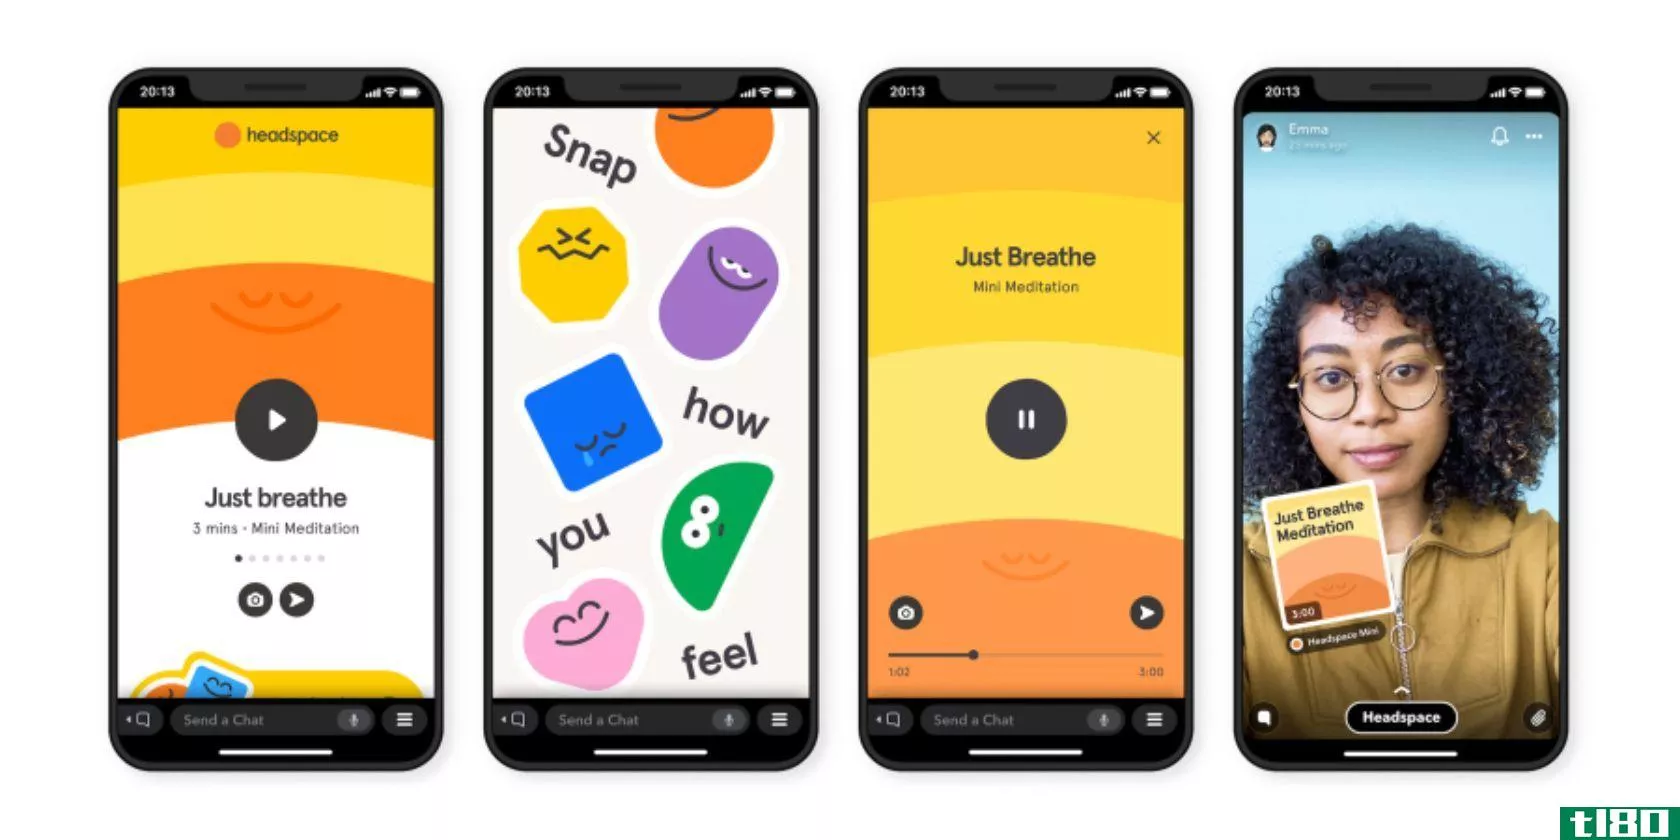 snap mini是你在snapchat中使用的小型应用程序